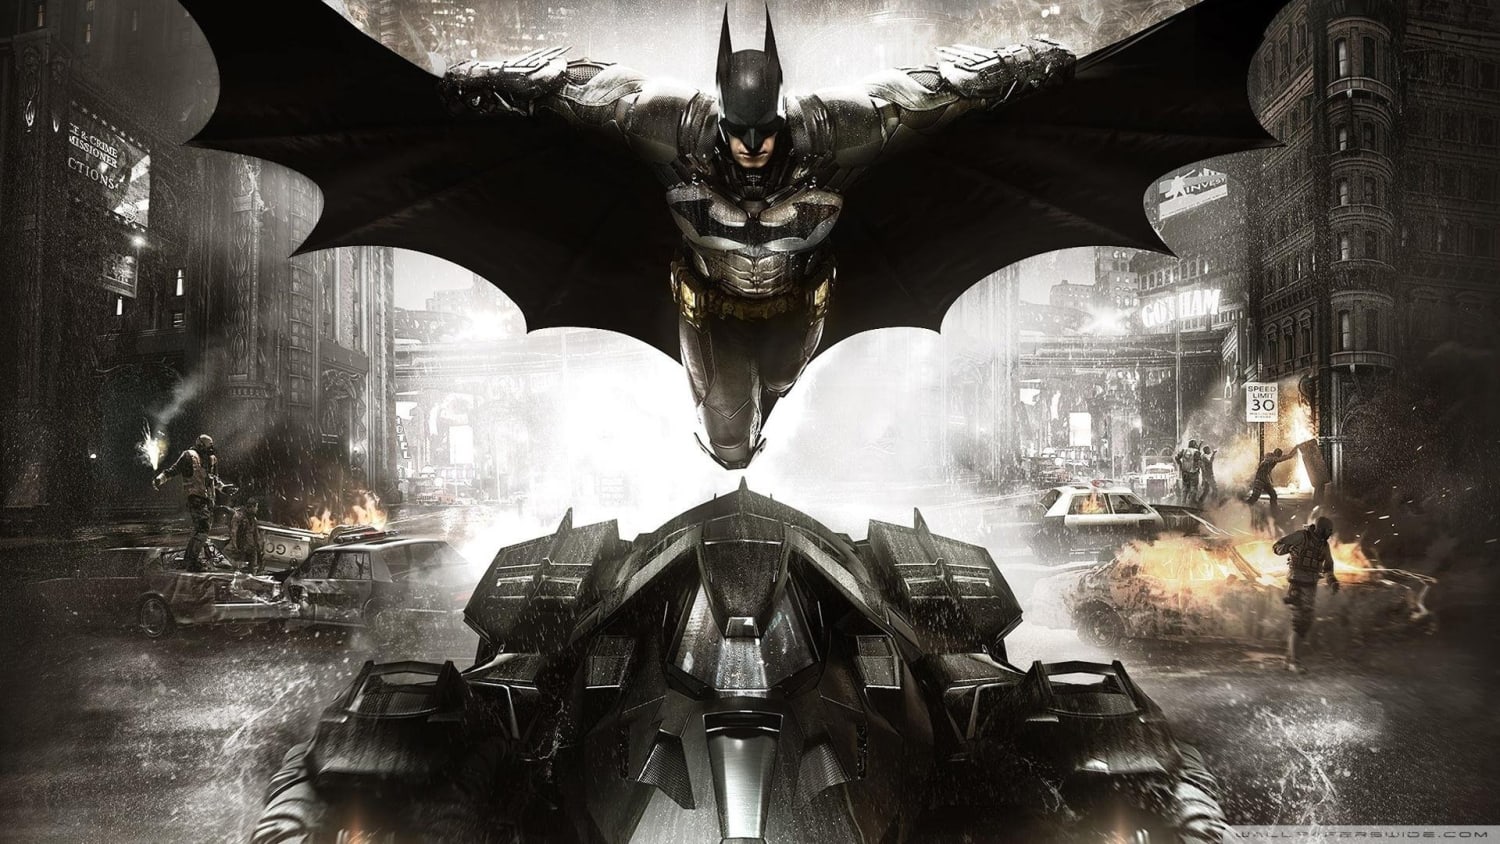 5 Batman: Arkham Knight PC Performance Optimization Tips